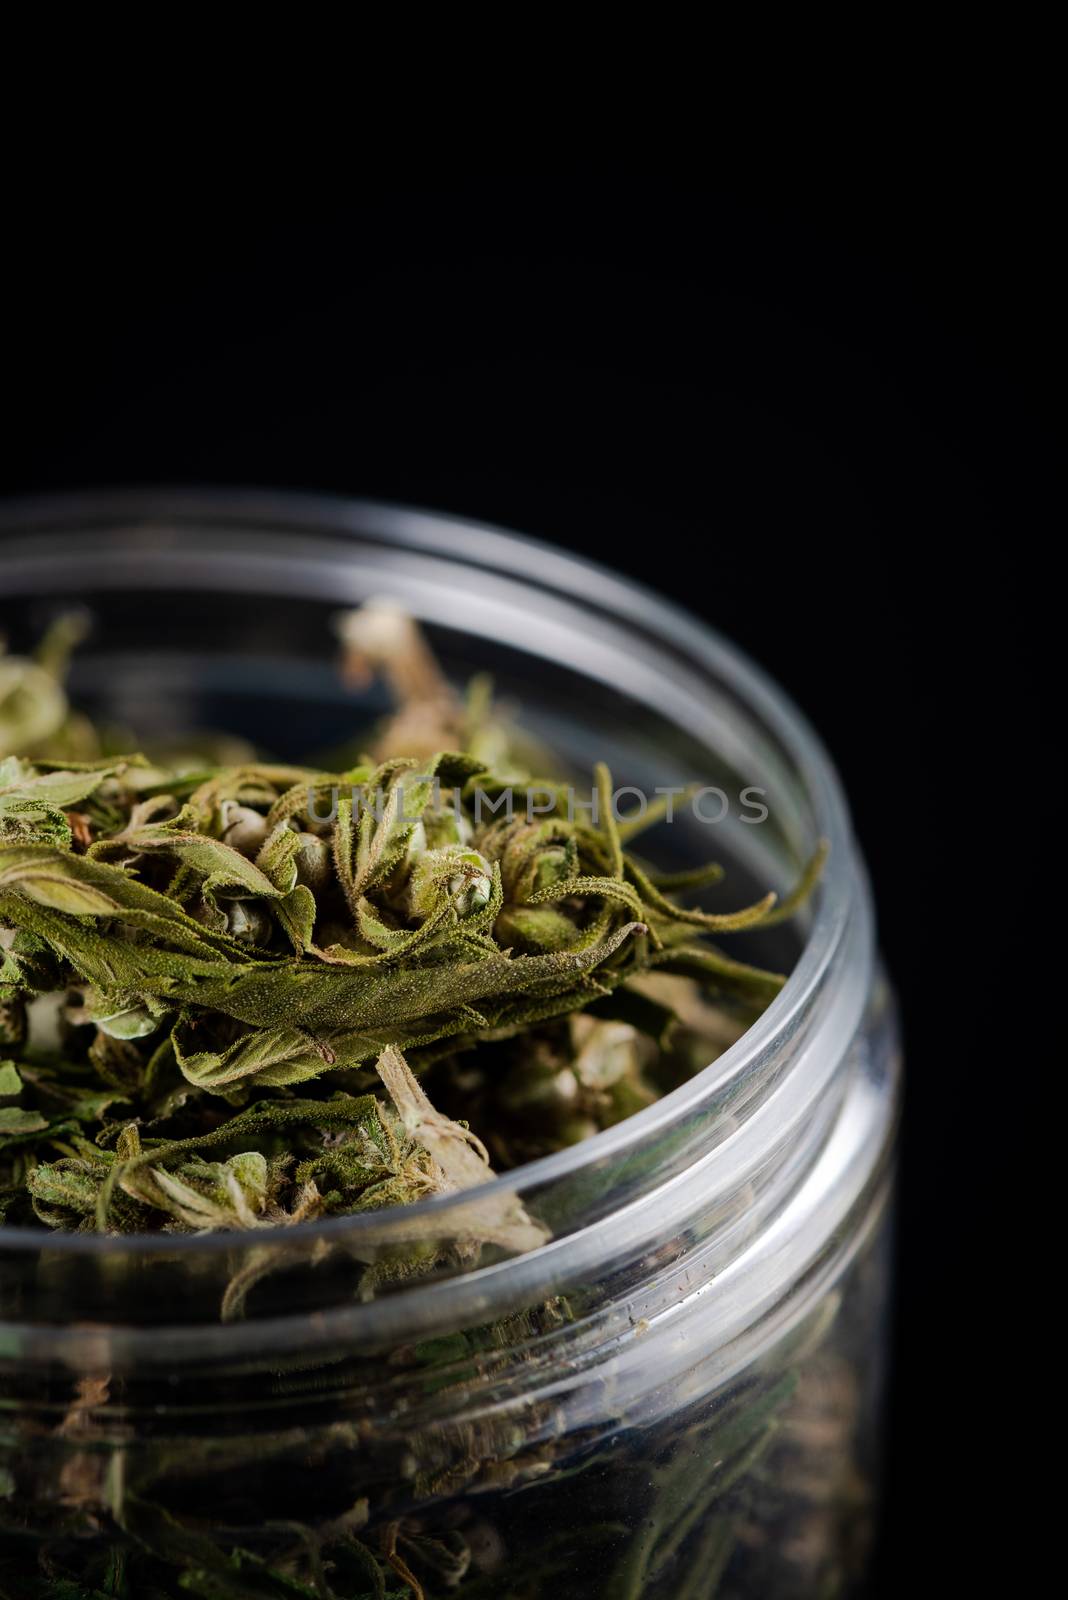 Sativa Indica or Cannabis Marijuana Flower Buds in Glass Jar. re by merc67